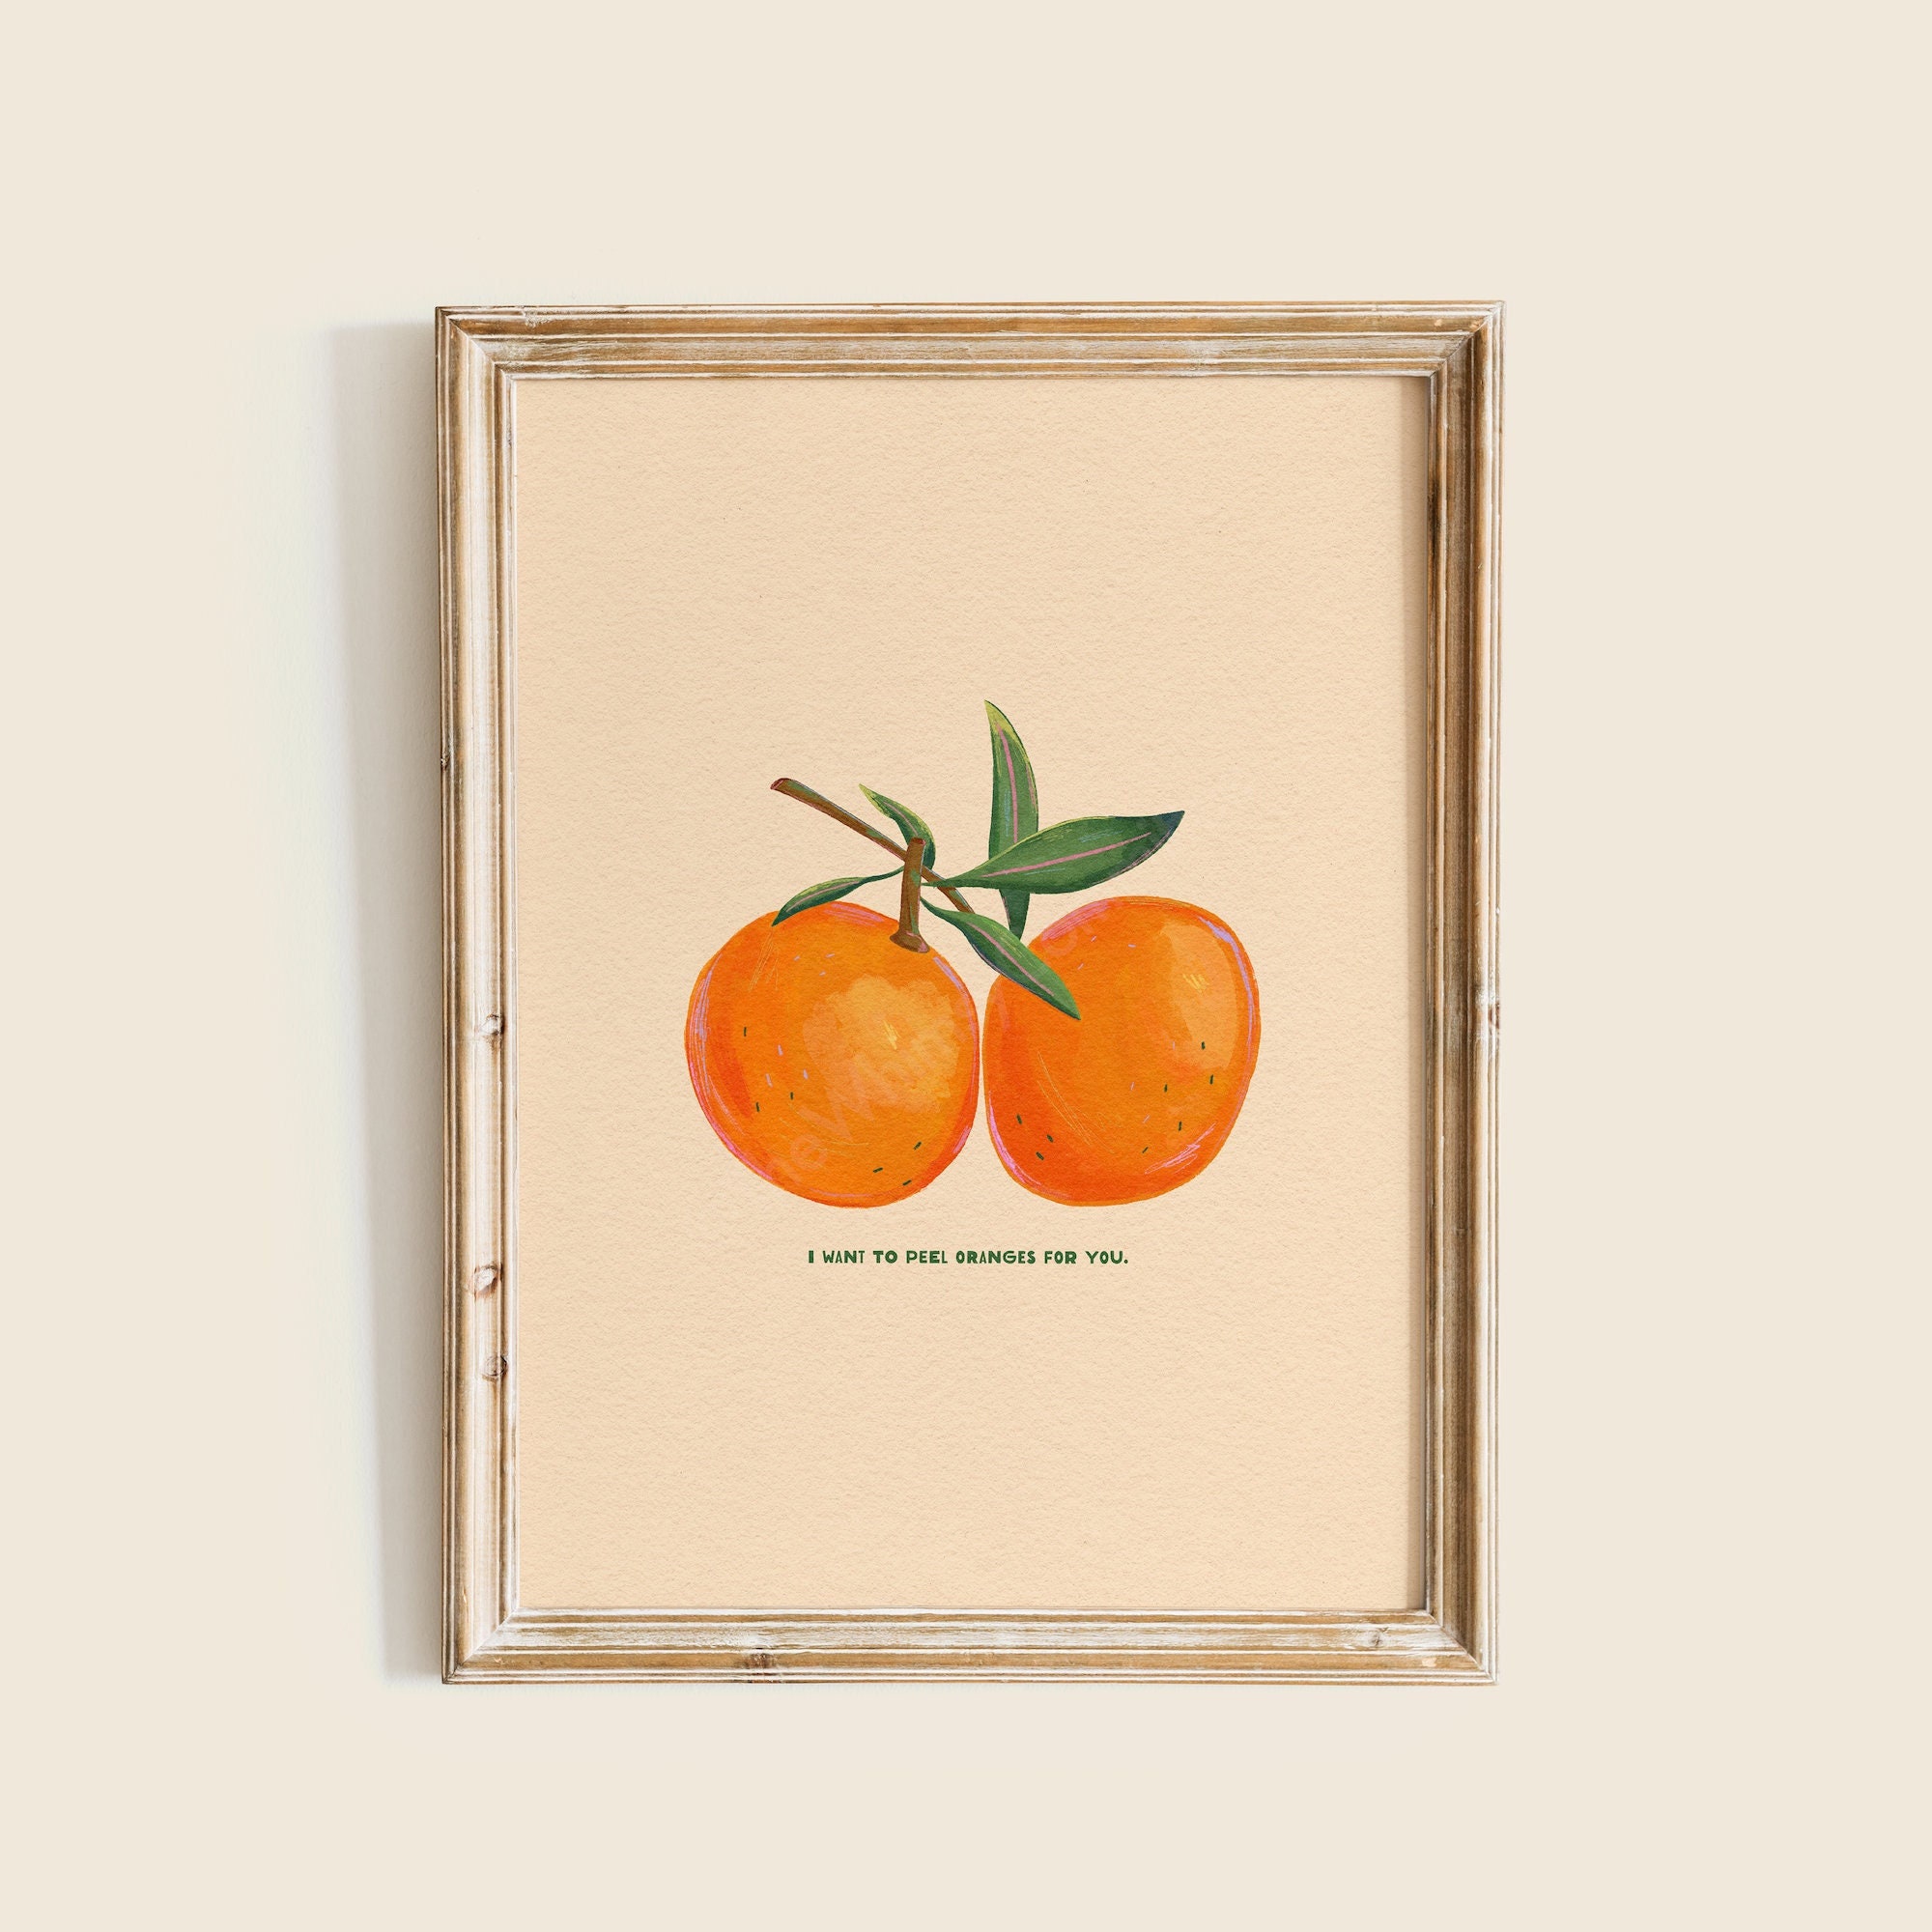 I Want to Peel Oranges for You Art Print, Orange Illustration, Fruit Art  Print, Kitchen Wall Decor, Room Decor, Illustrated Poster Design 